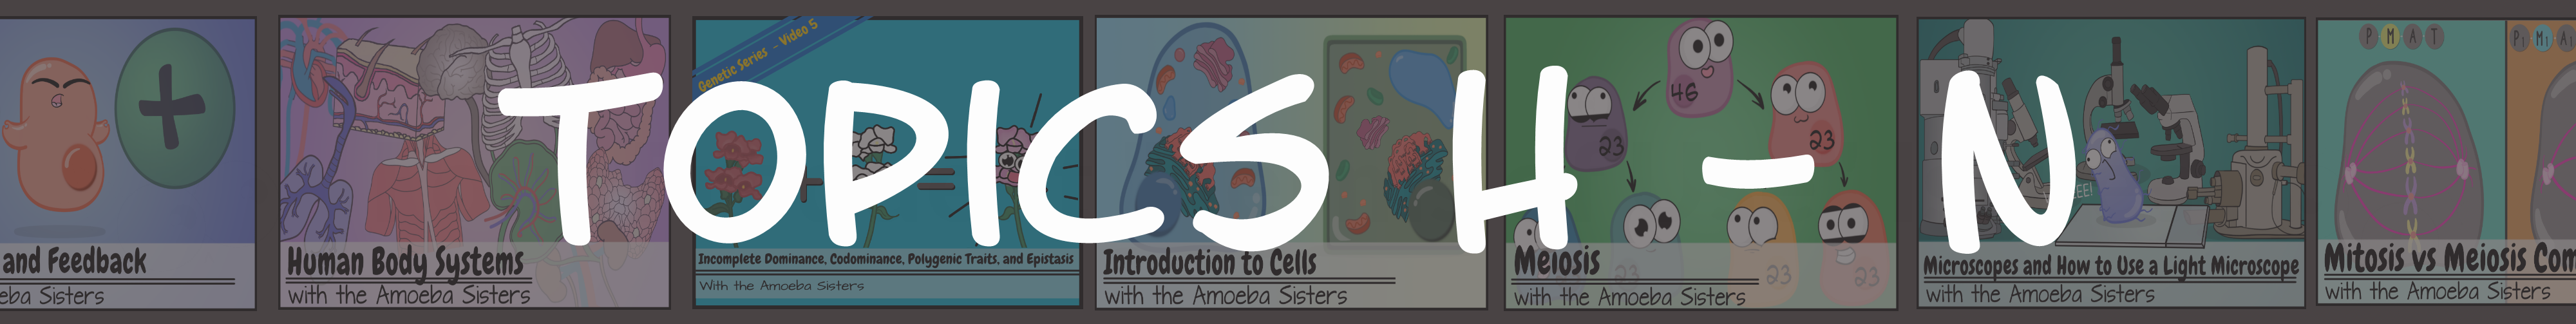 Amoeba Sisters Handouts - Science with The Amoeba Sisters